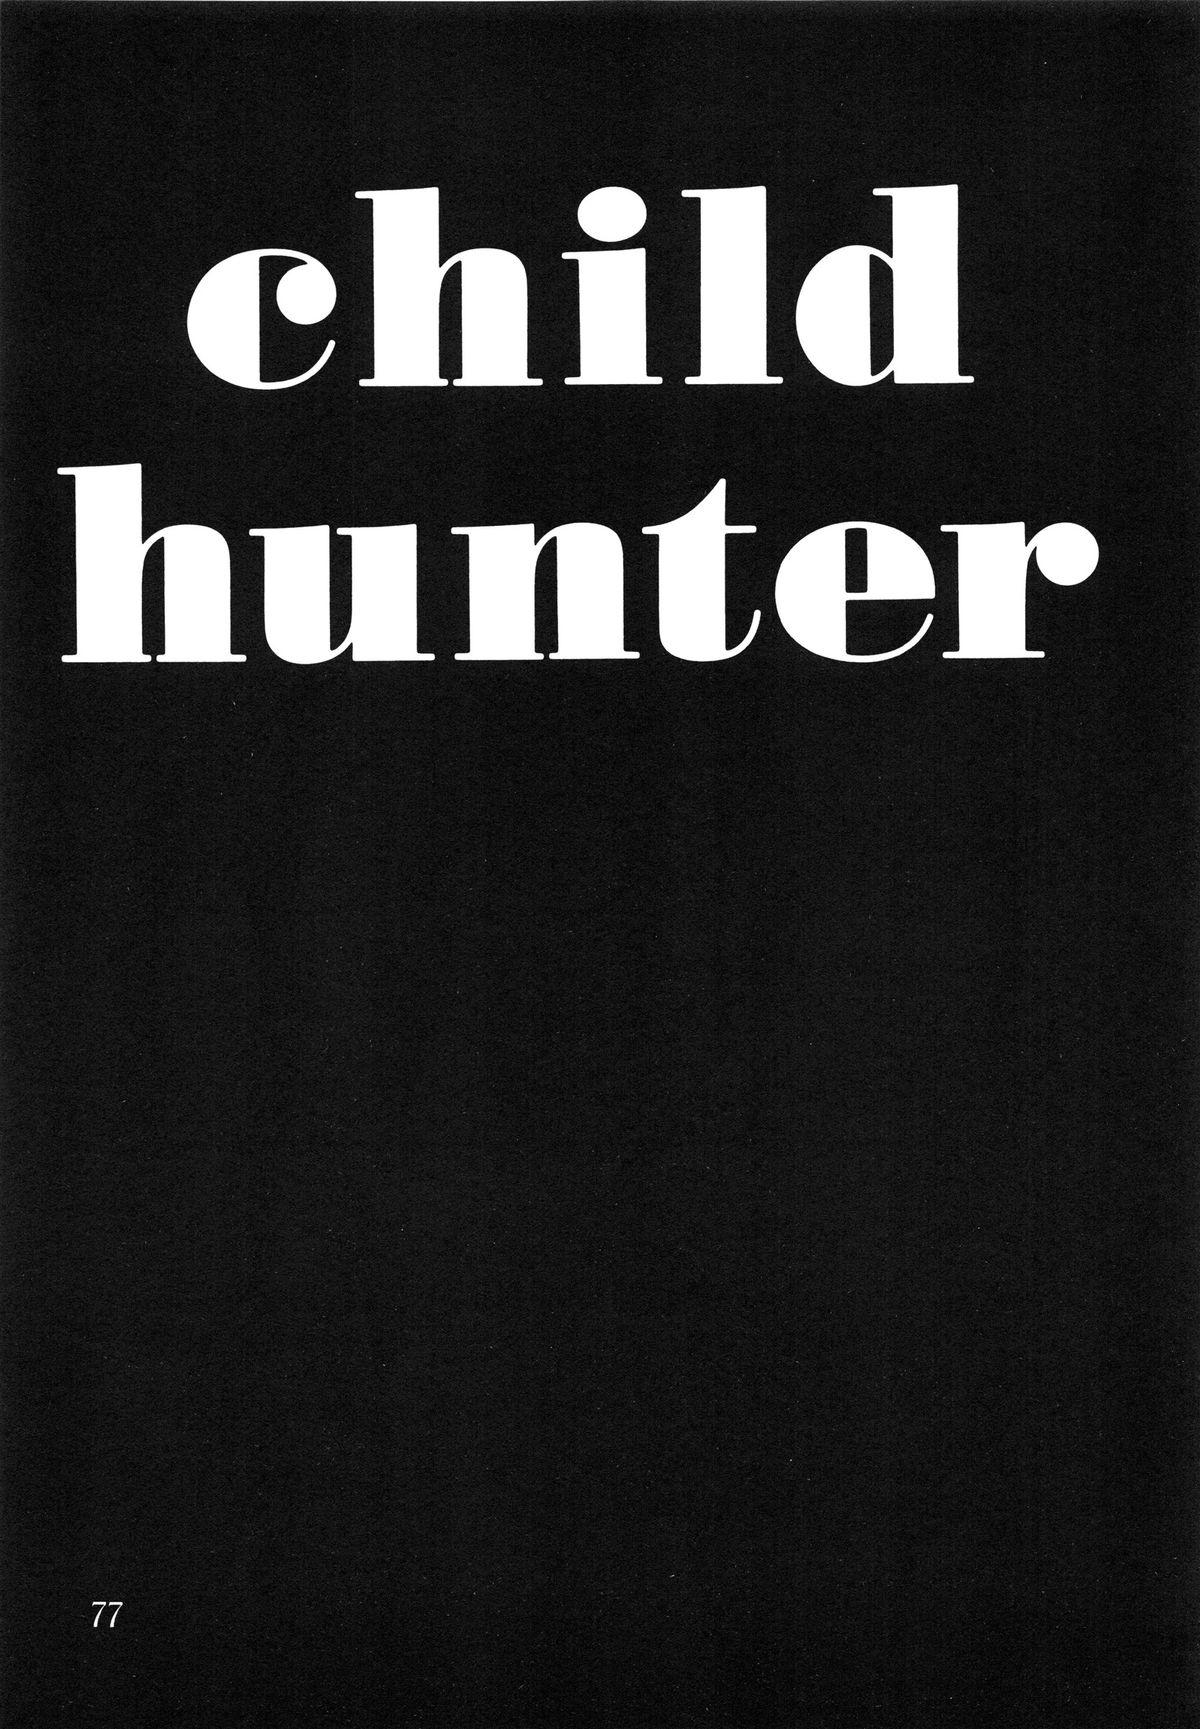 Cbt Child Hunter Verga - Picture 1